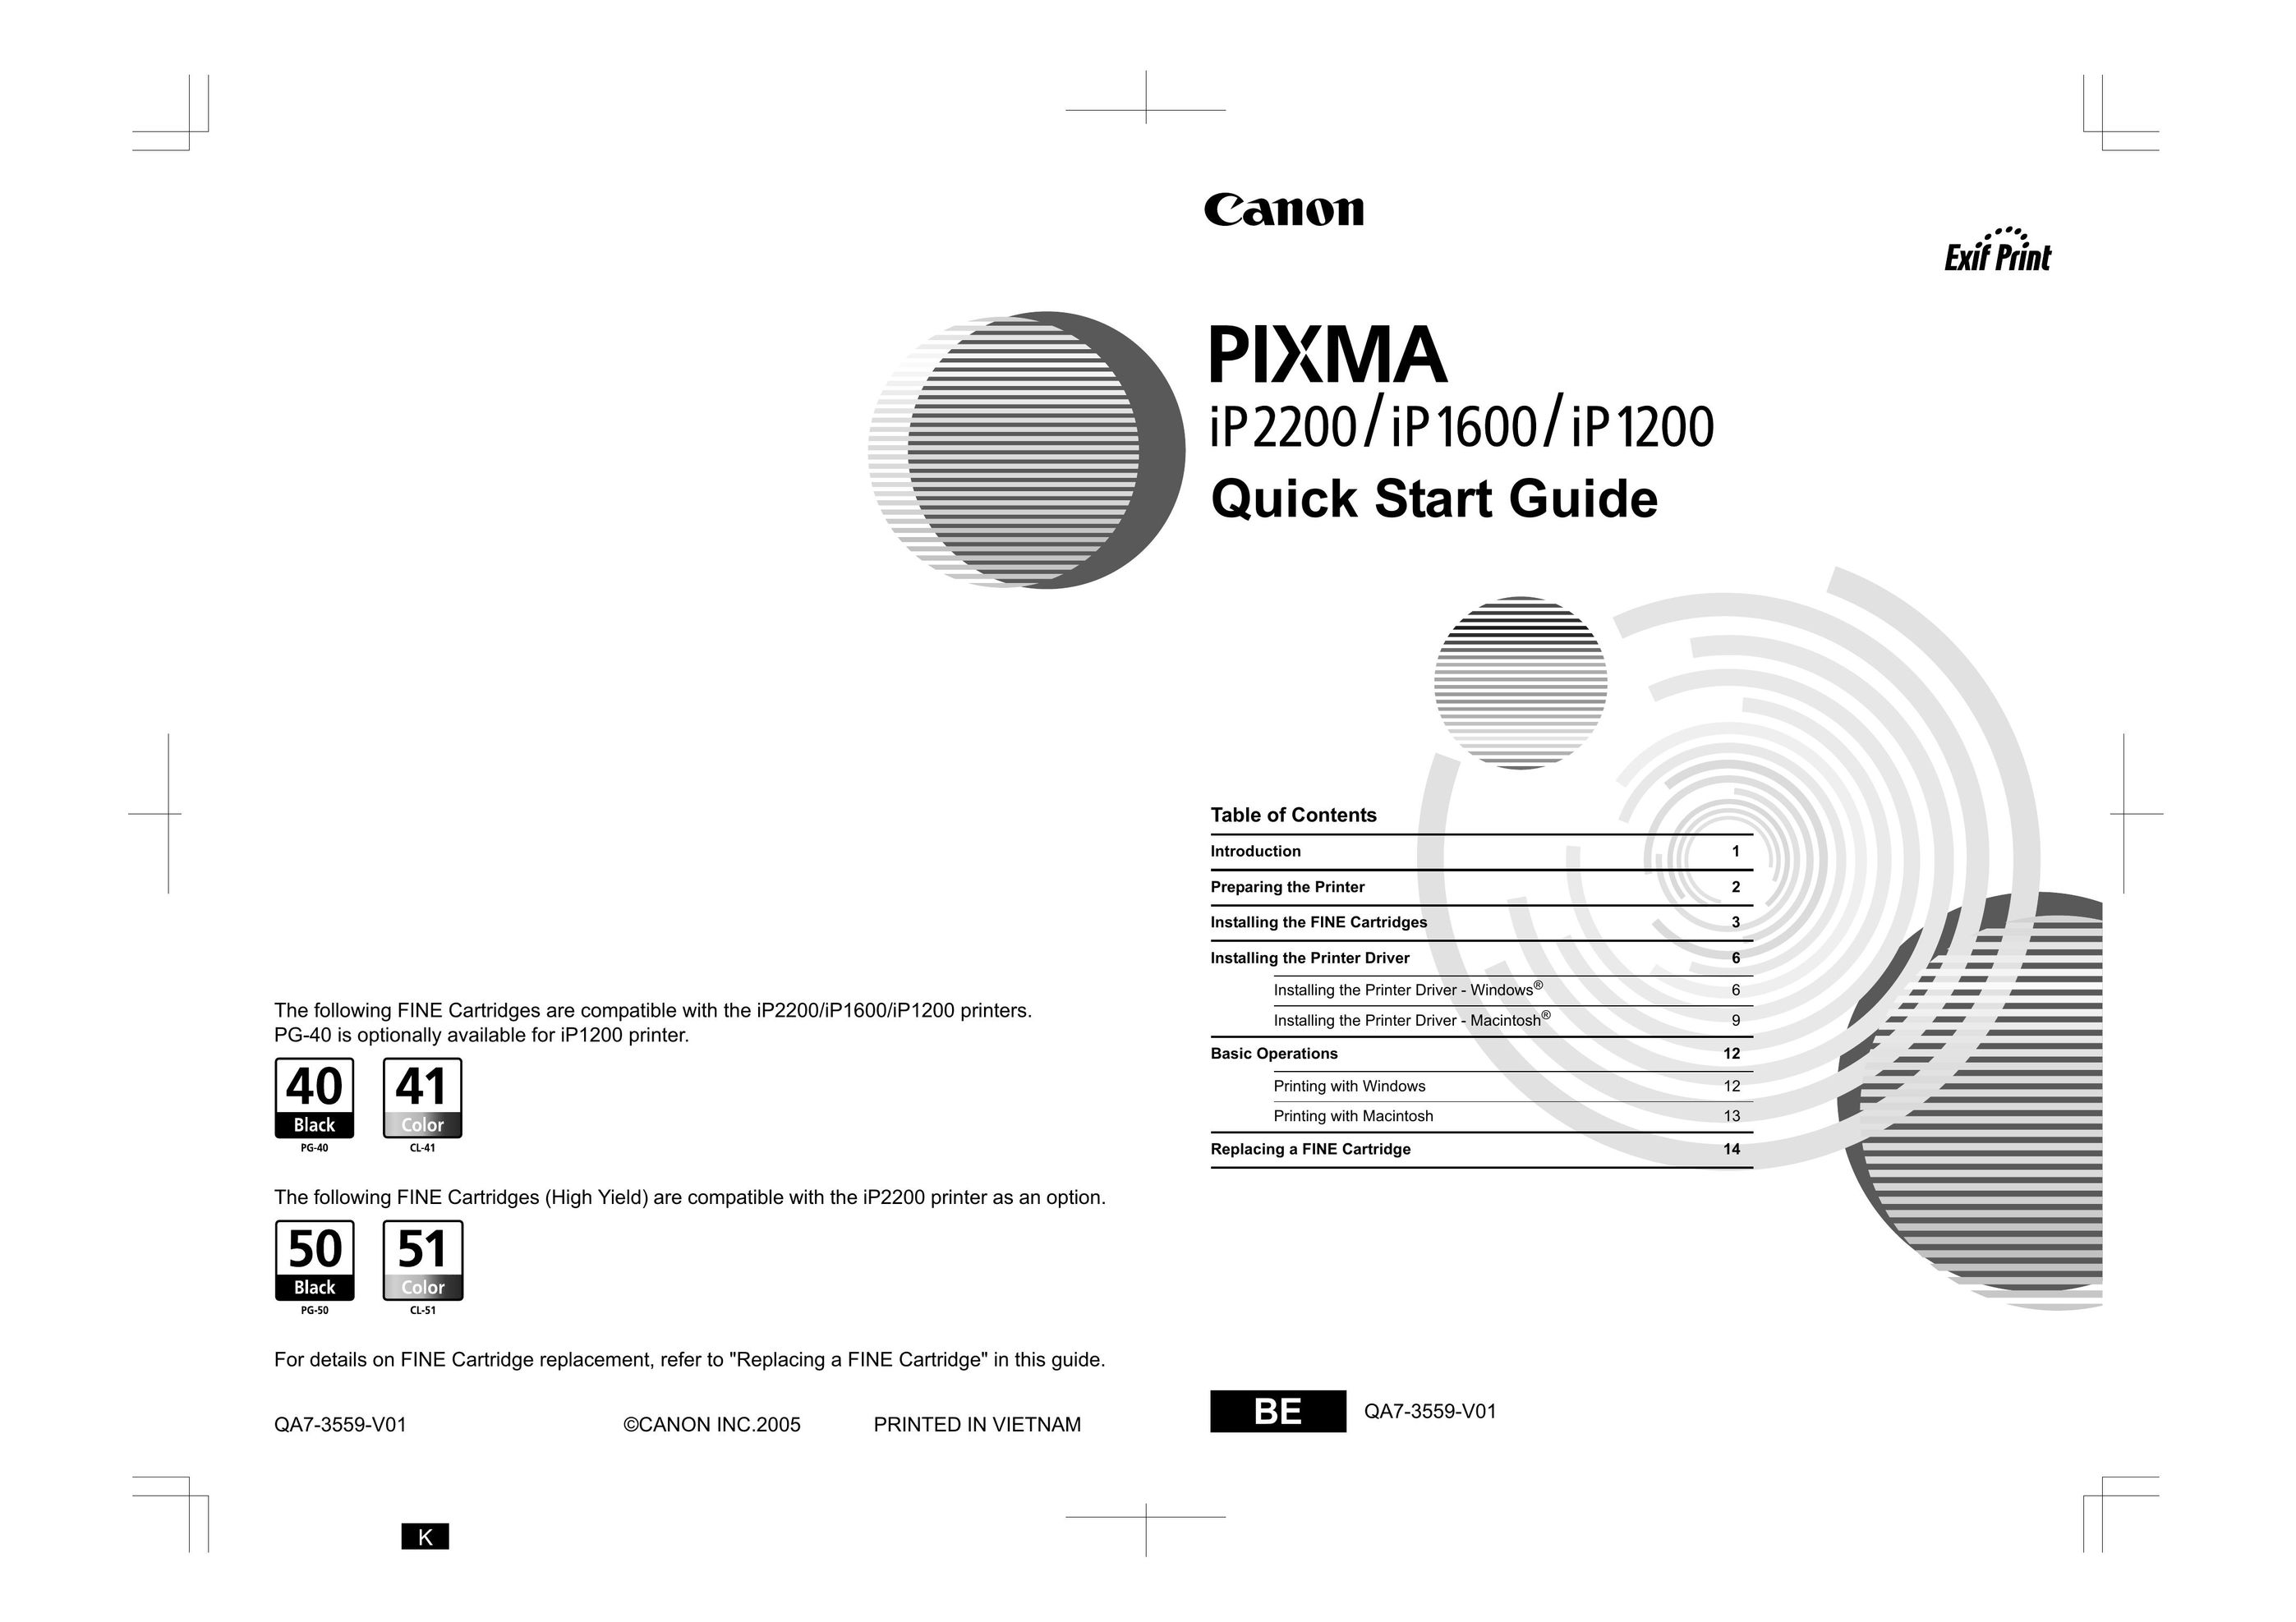 Sony iP1600 Printer User Manual